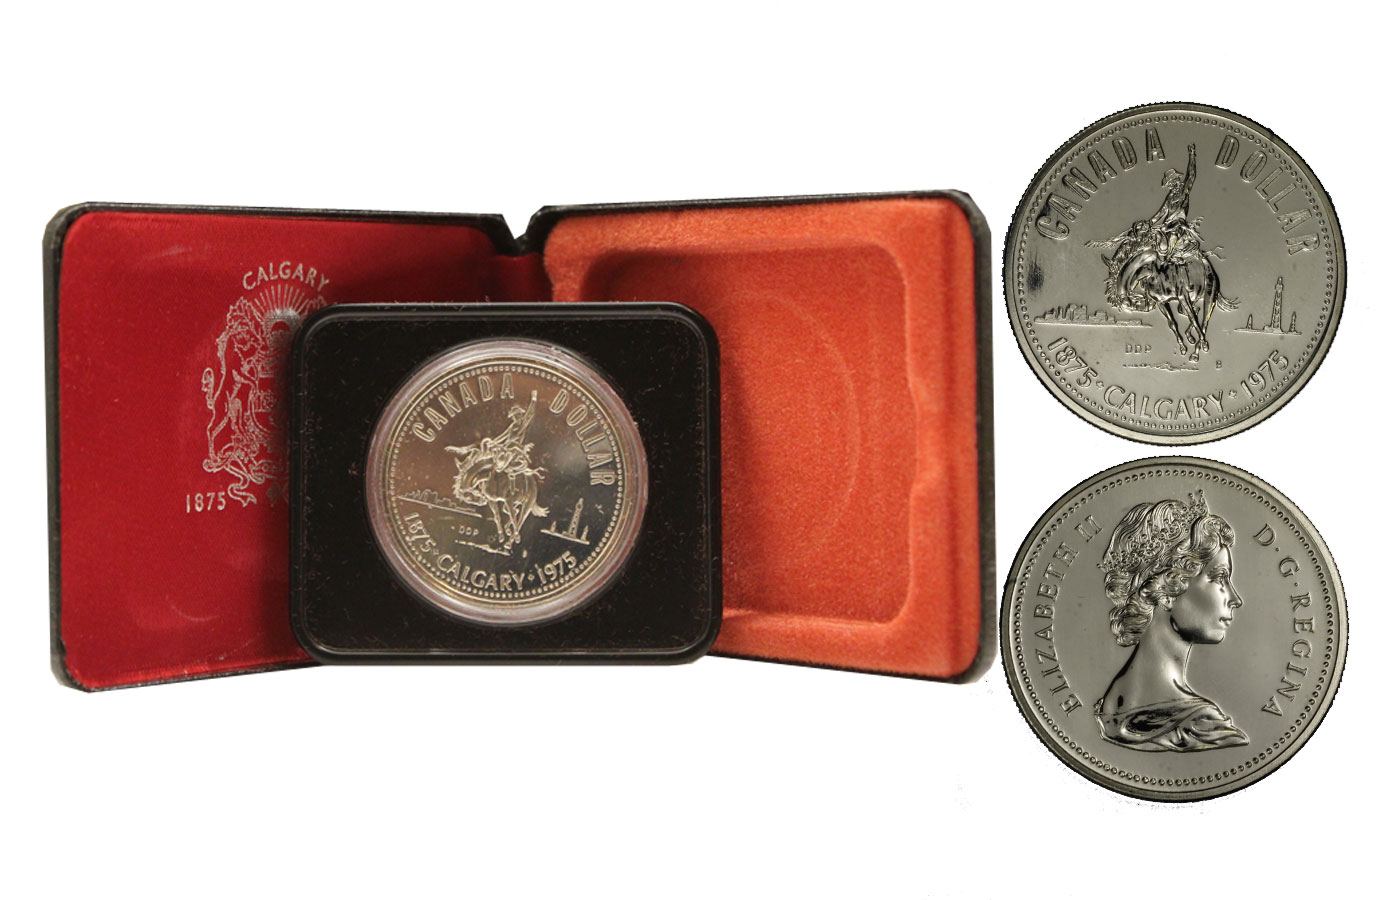 "100 Calgary" - Regina Elisabetta II - Dollaro gr. 23,32 in arg. 500/ - In conf originale